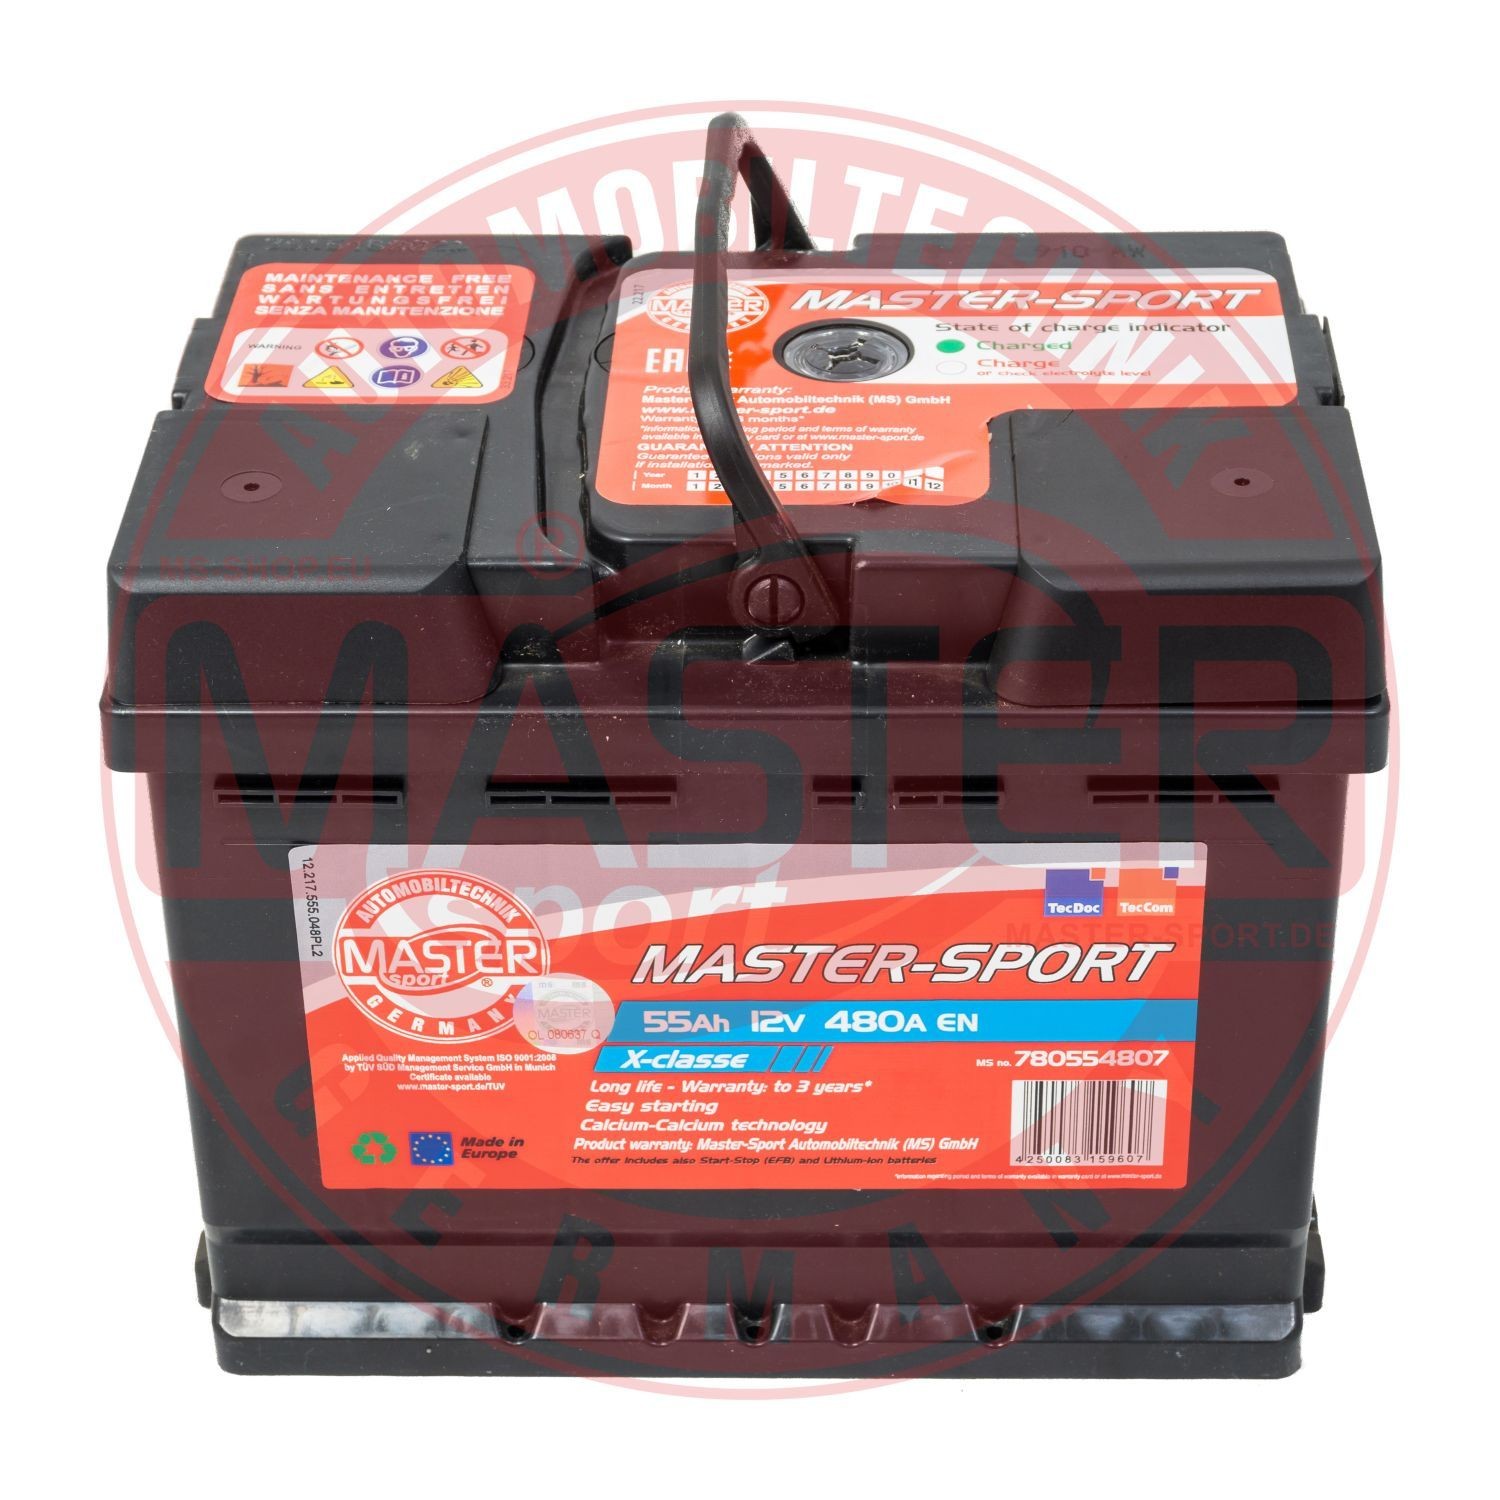 750554802 MASTER-SPORT Car battery SMART 12V 55Ah 480A B13 L2 Lead-acid battery